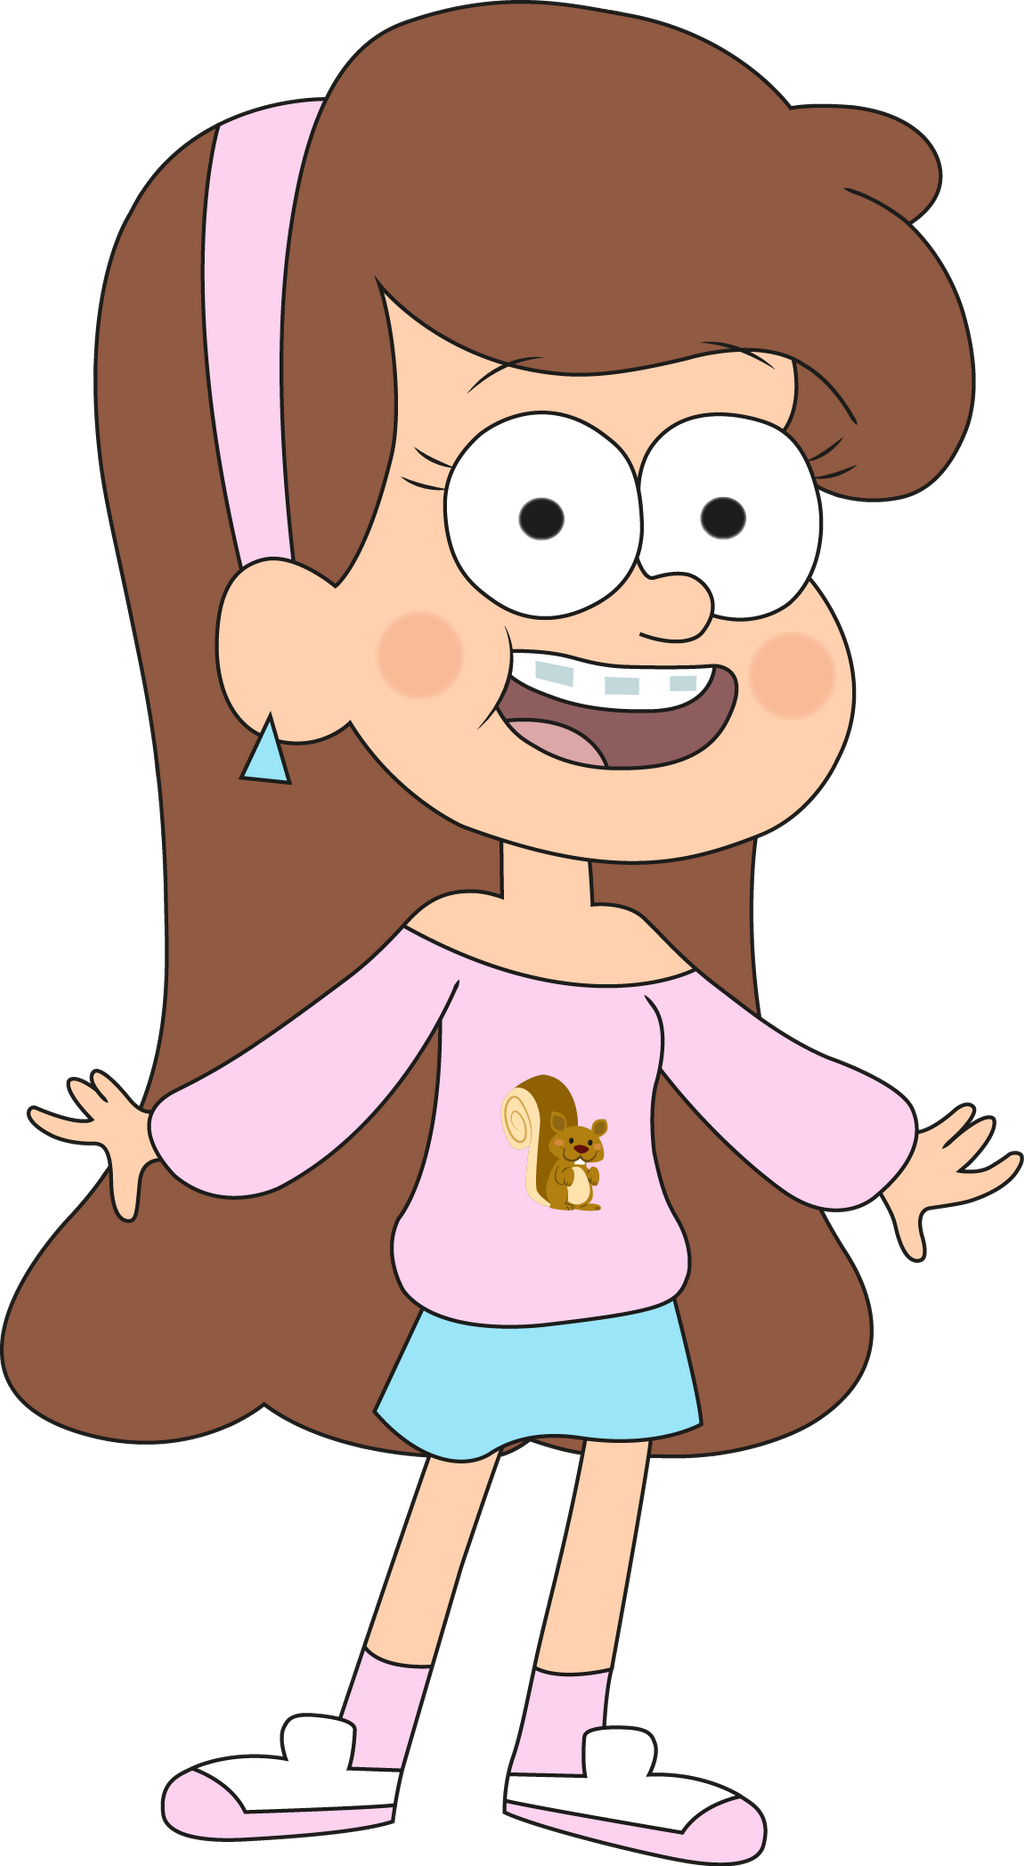 Mabel Gravity Falls